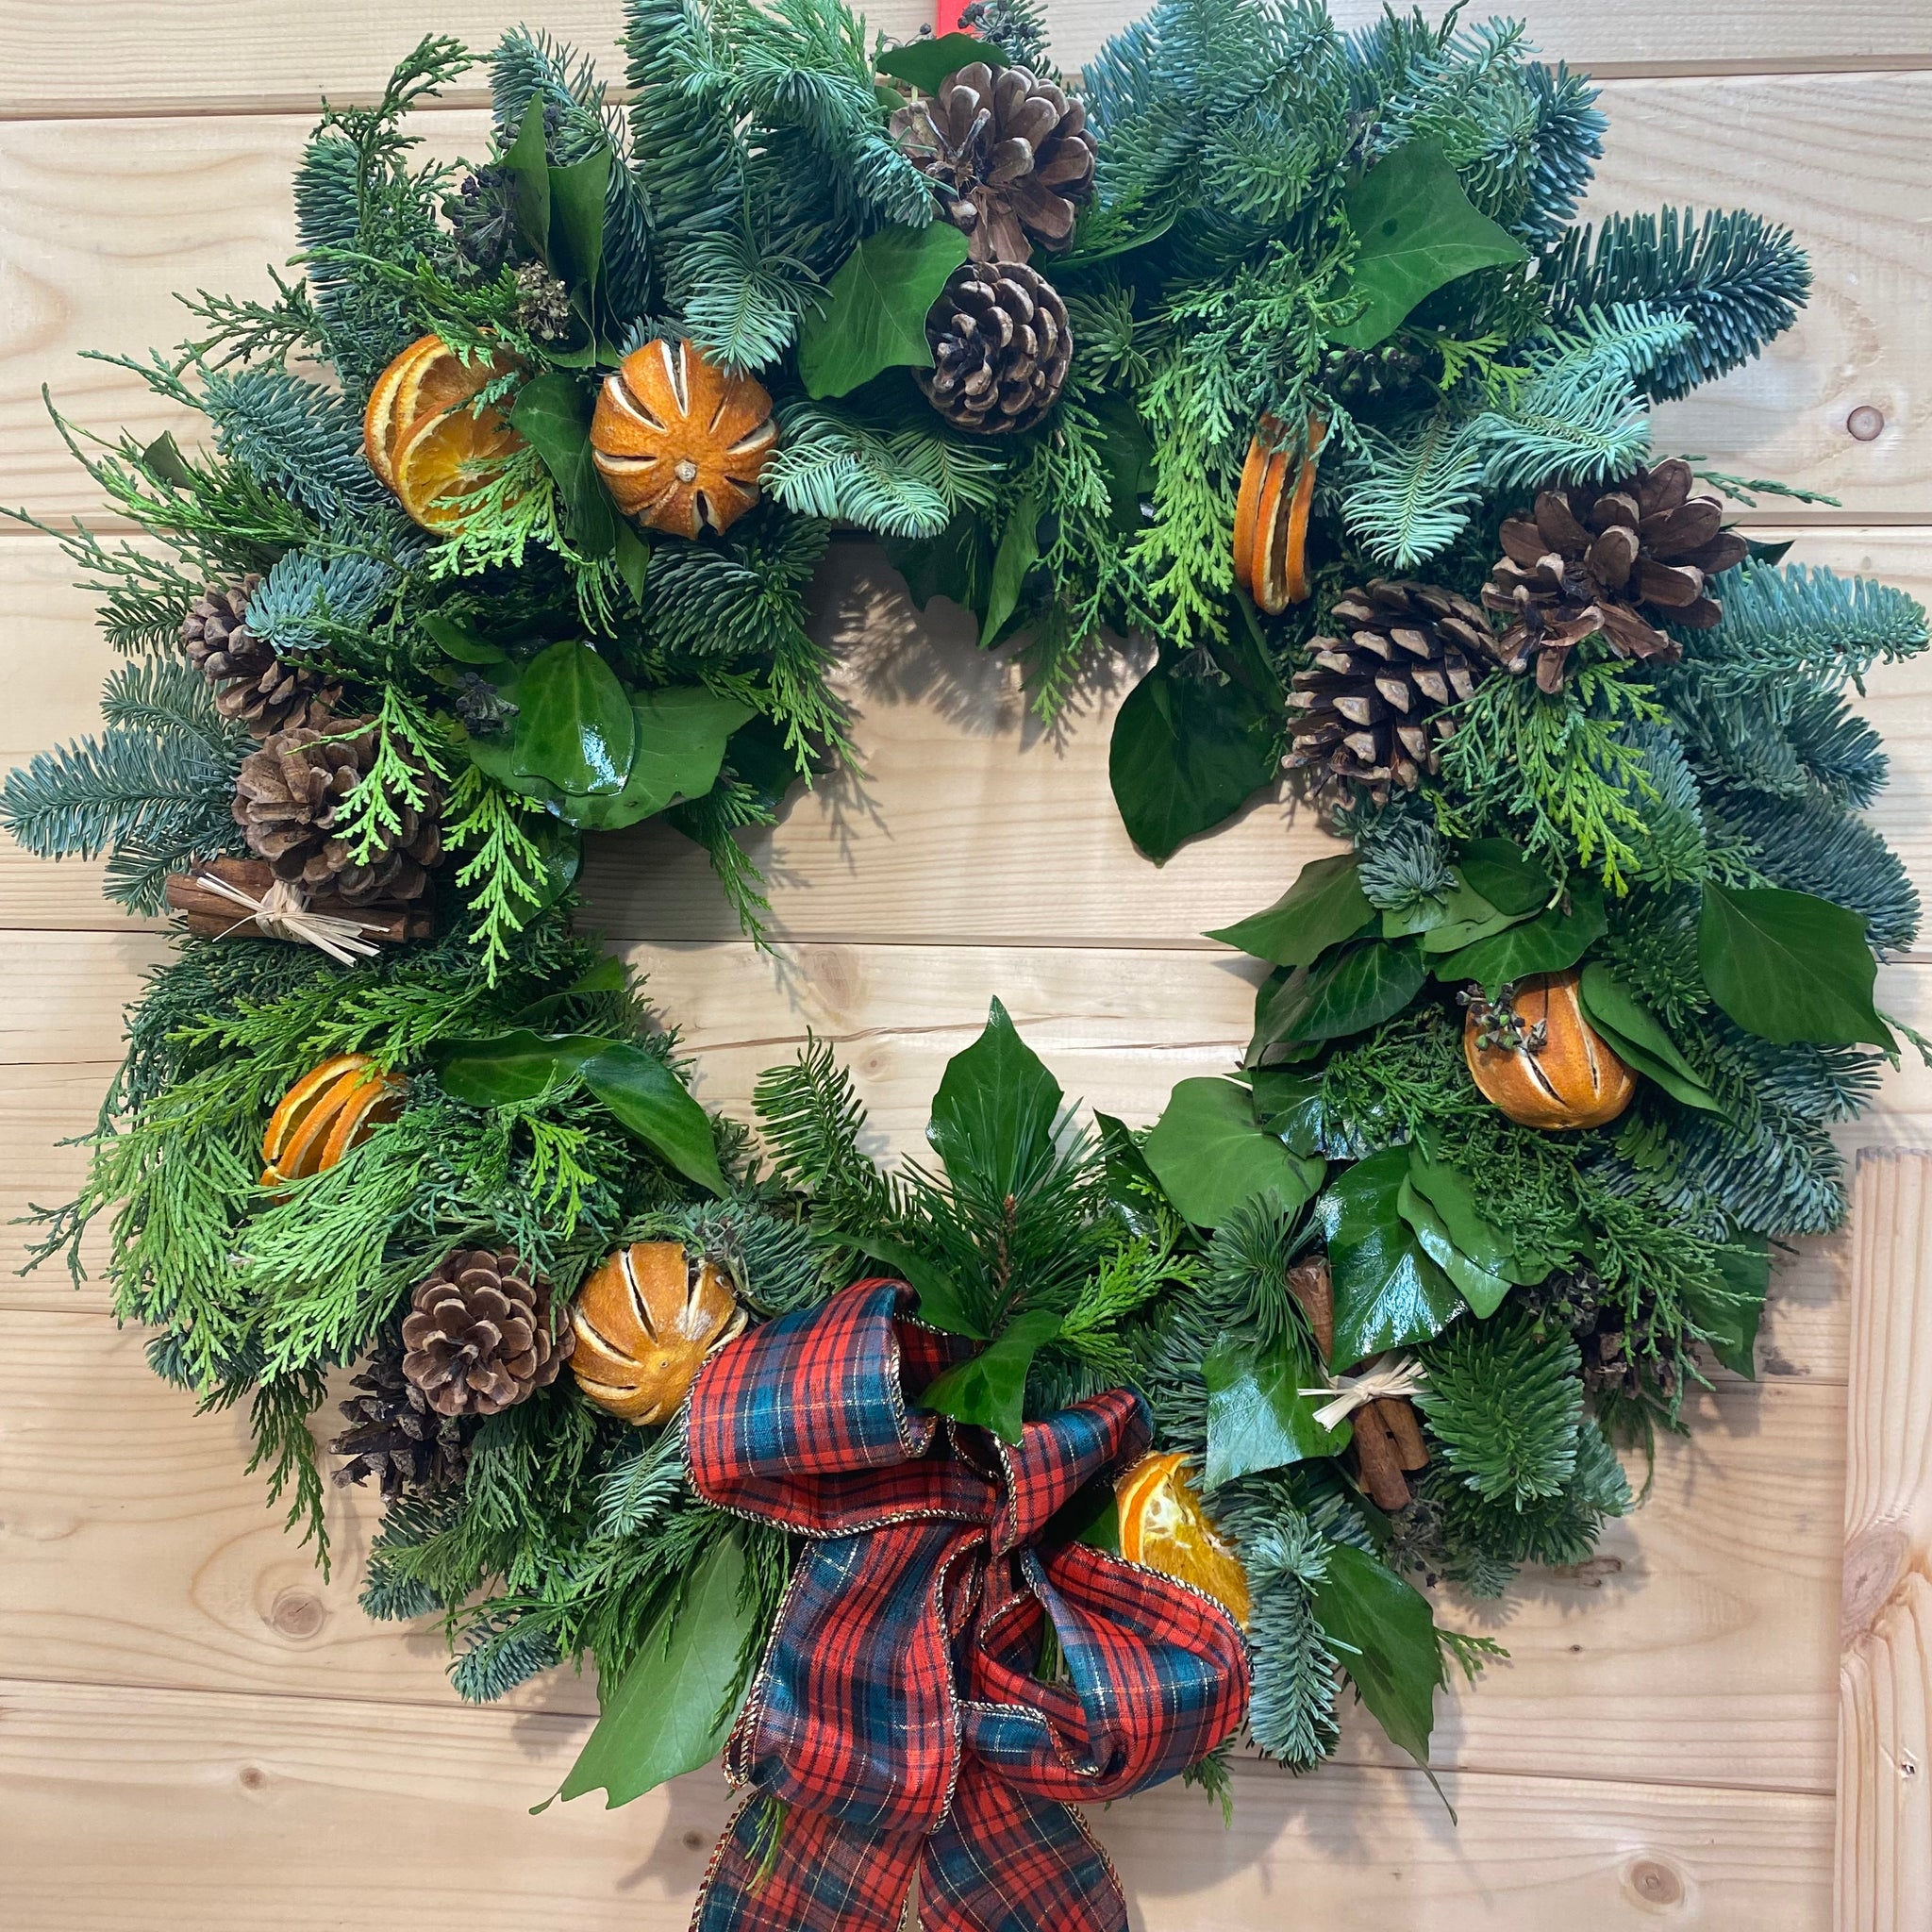 Traditional festive holly wreath